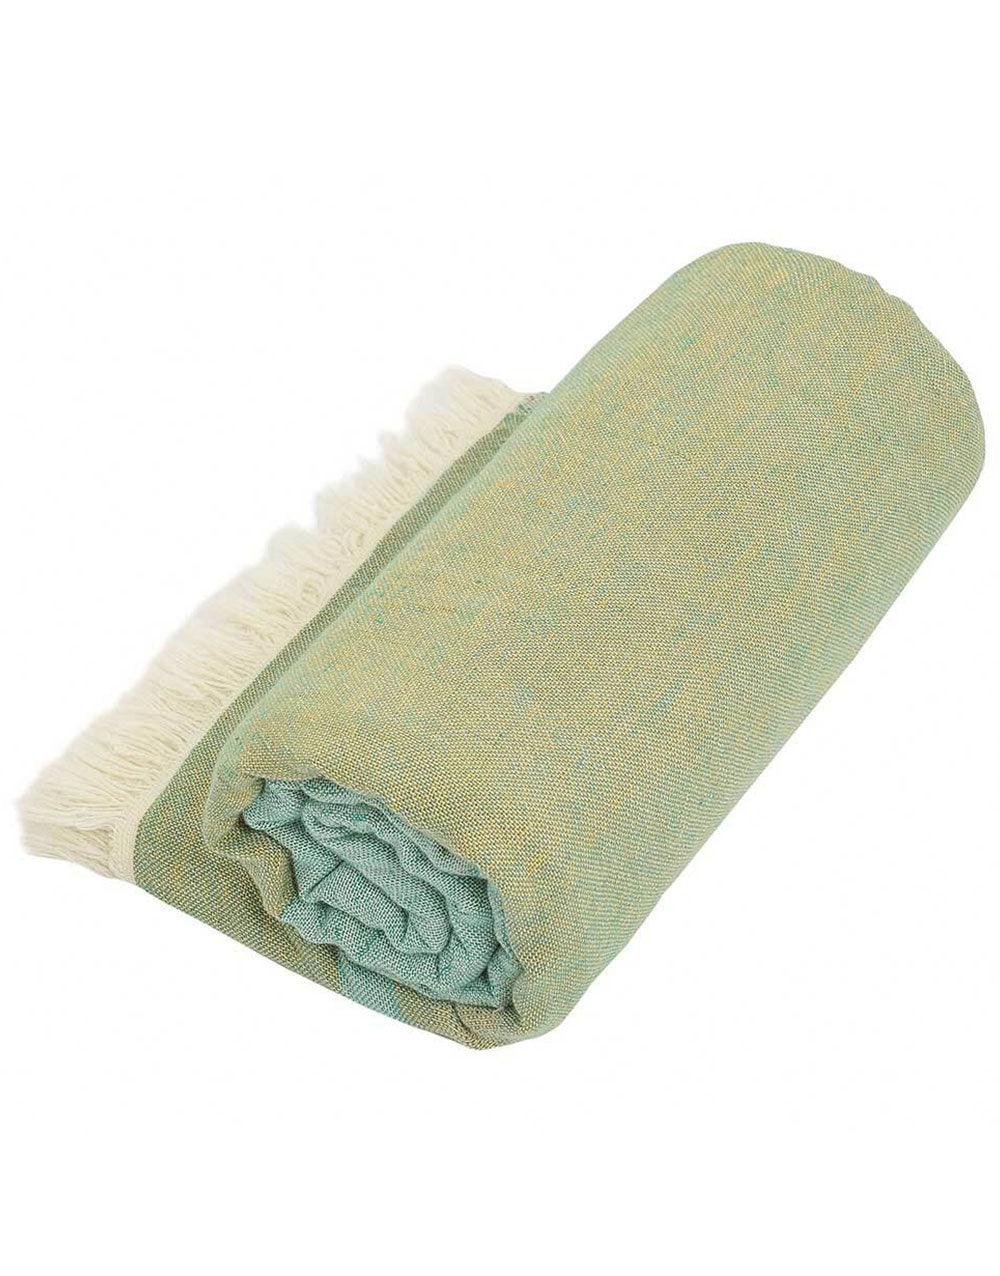 Cacala Turkish Bath Towel Nautical Series 36"x67" 100% Cotton - Cacala